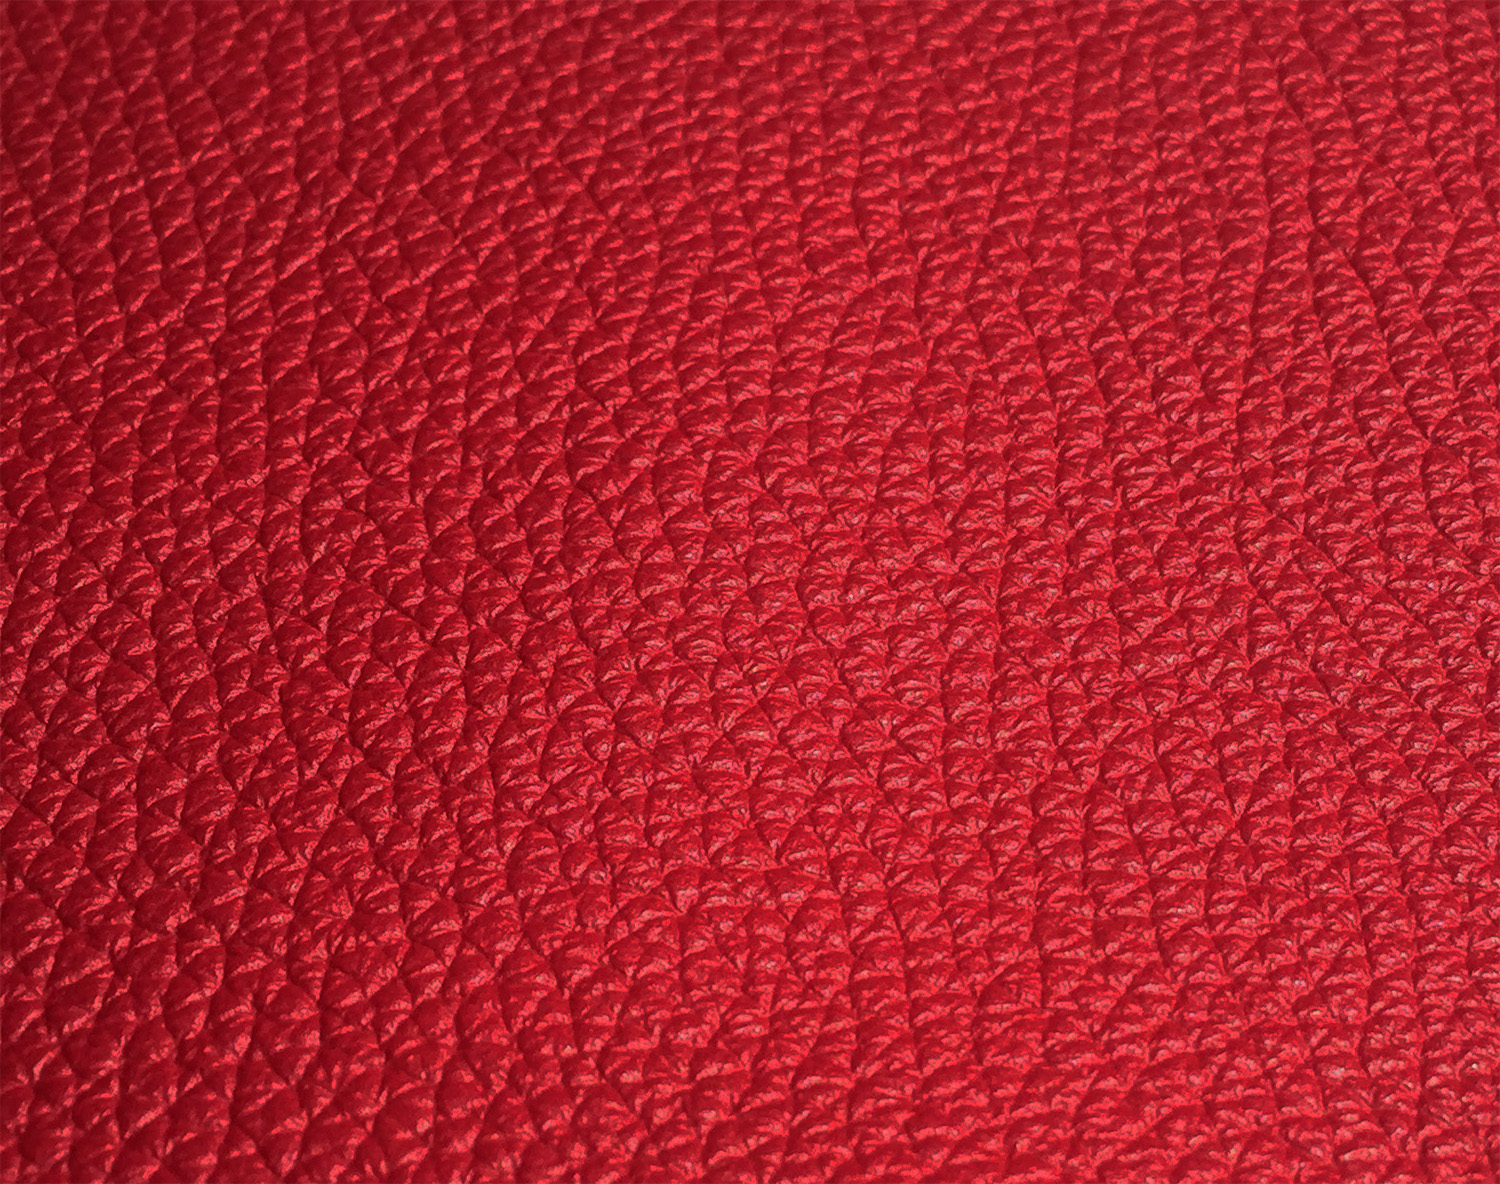 Stressless Cori Brick Red Leather 09160 by Ekornes